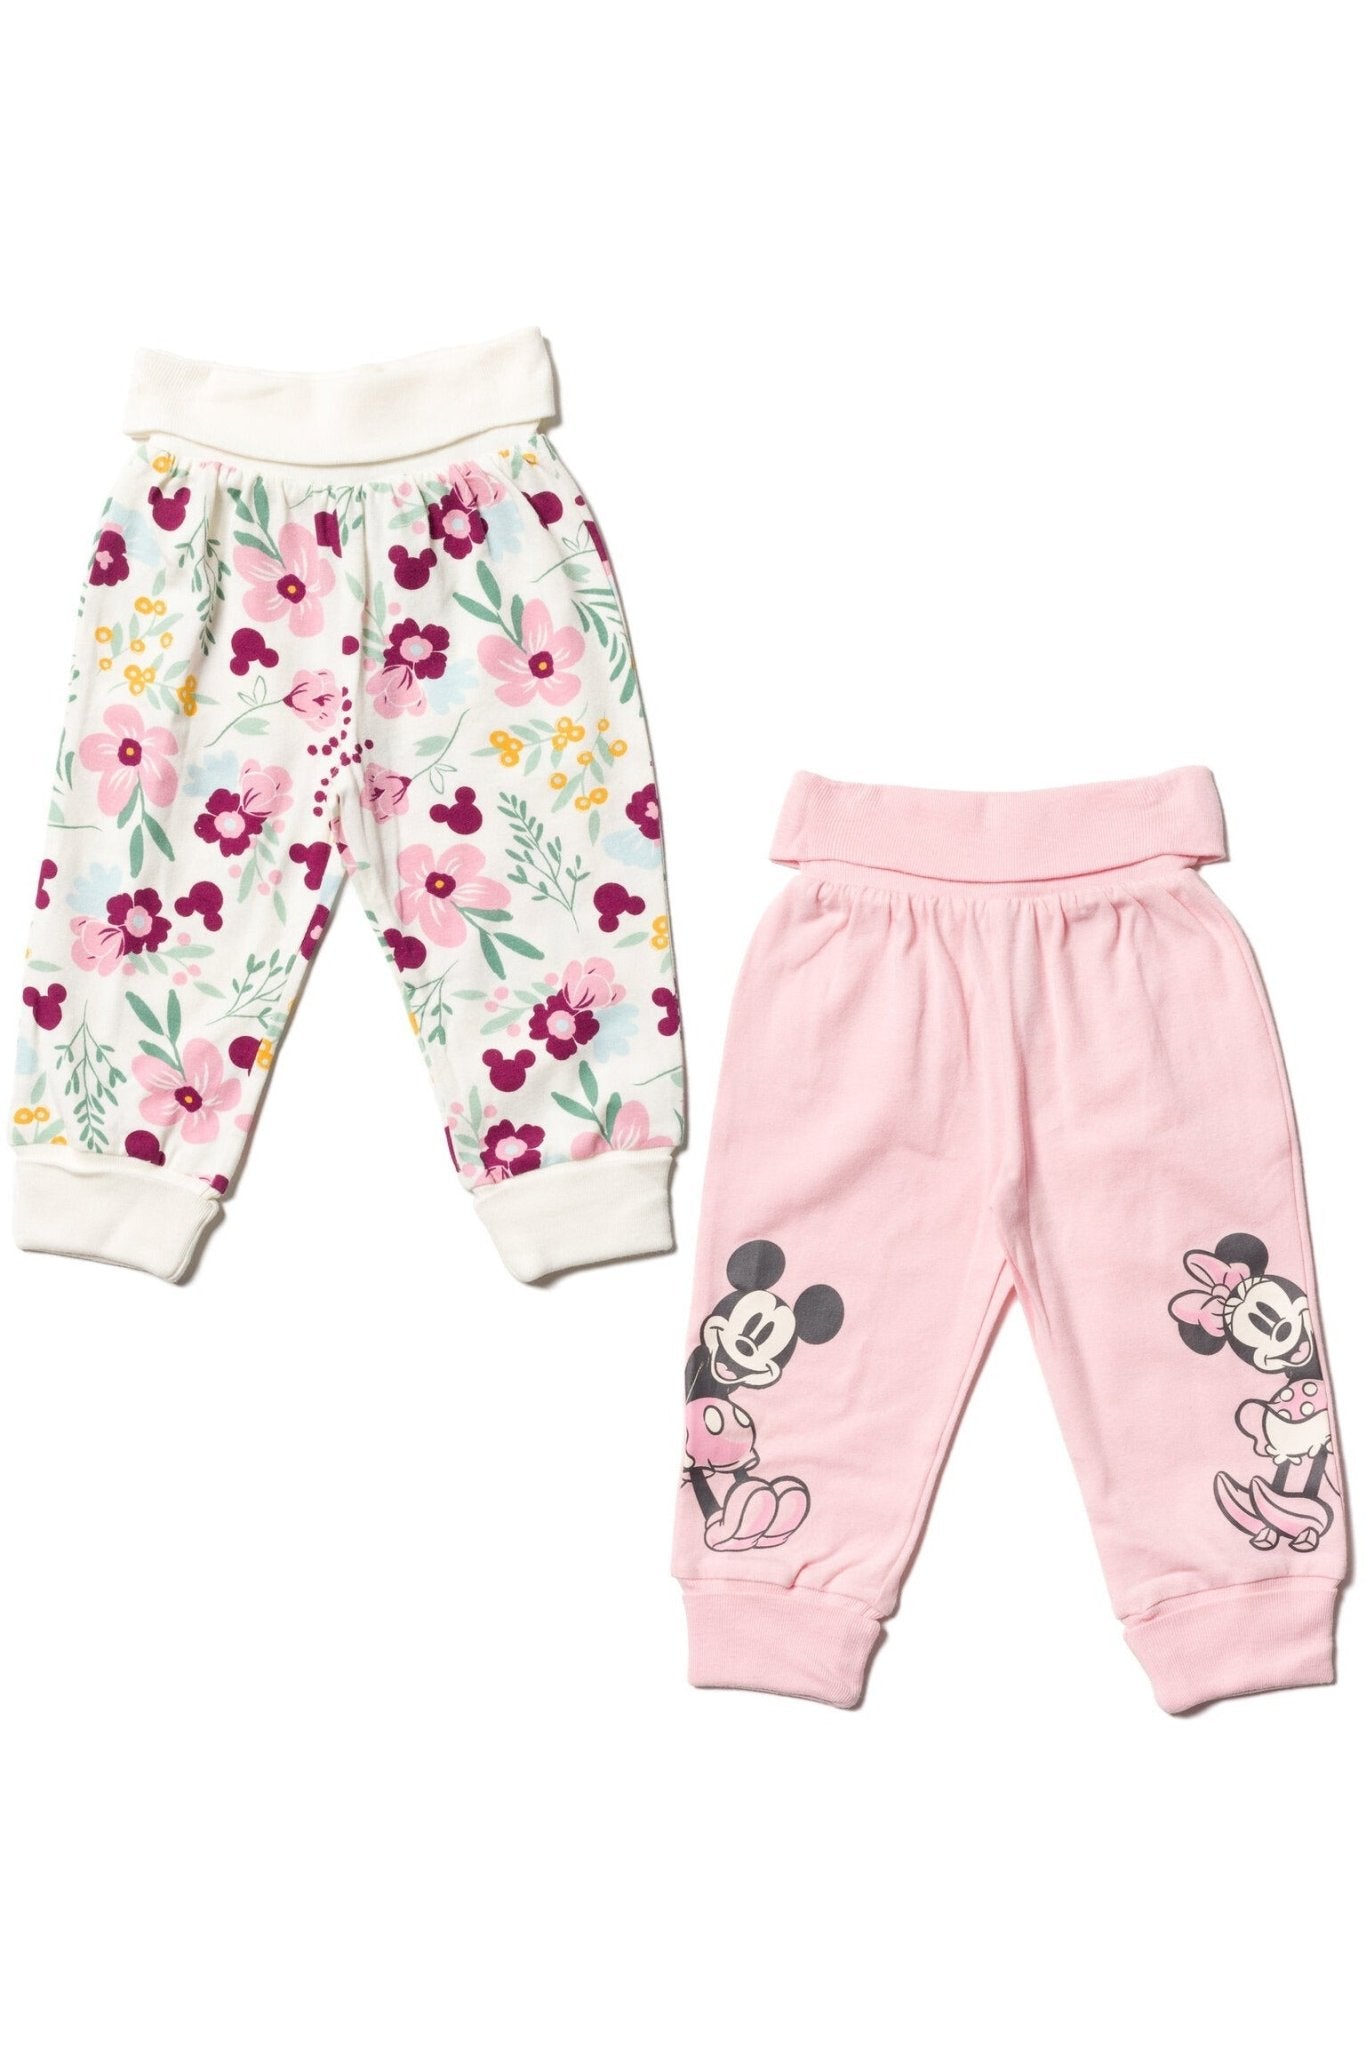 Disney Minnie Mouse Princess Little Mermaid Cinderella Belle Jasmine Baby Girls 2 Pack Pants Newborn to Infant - imagikids